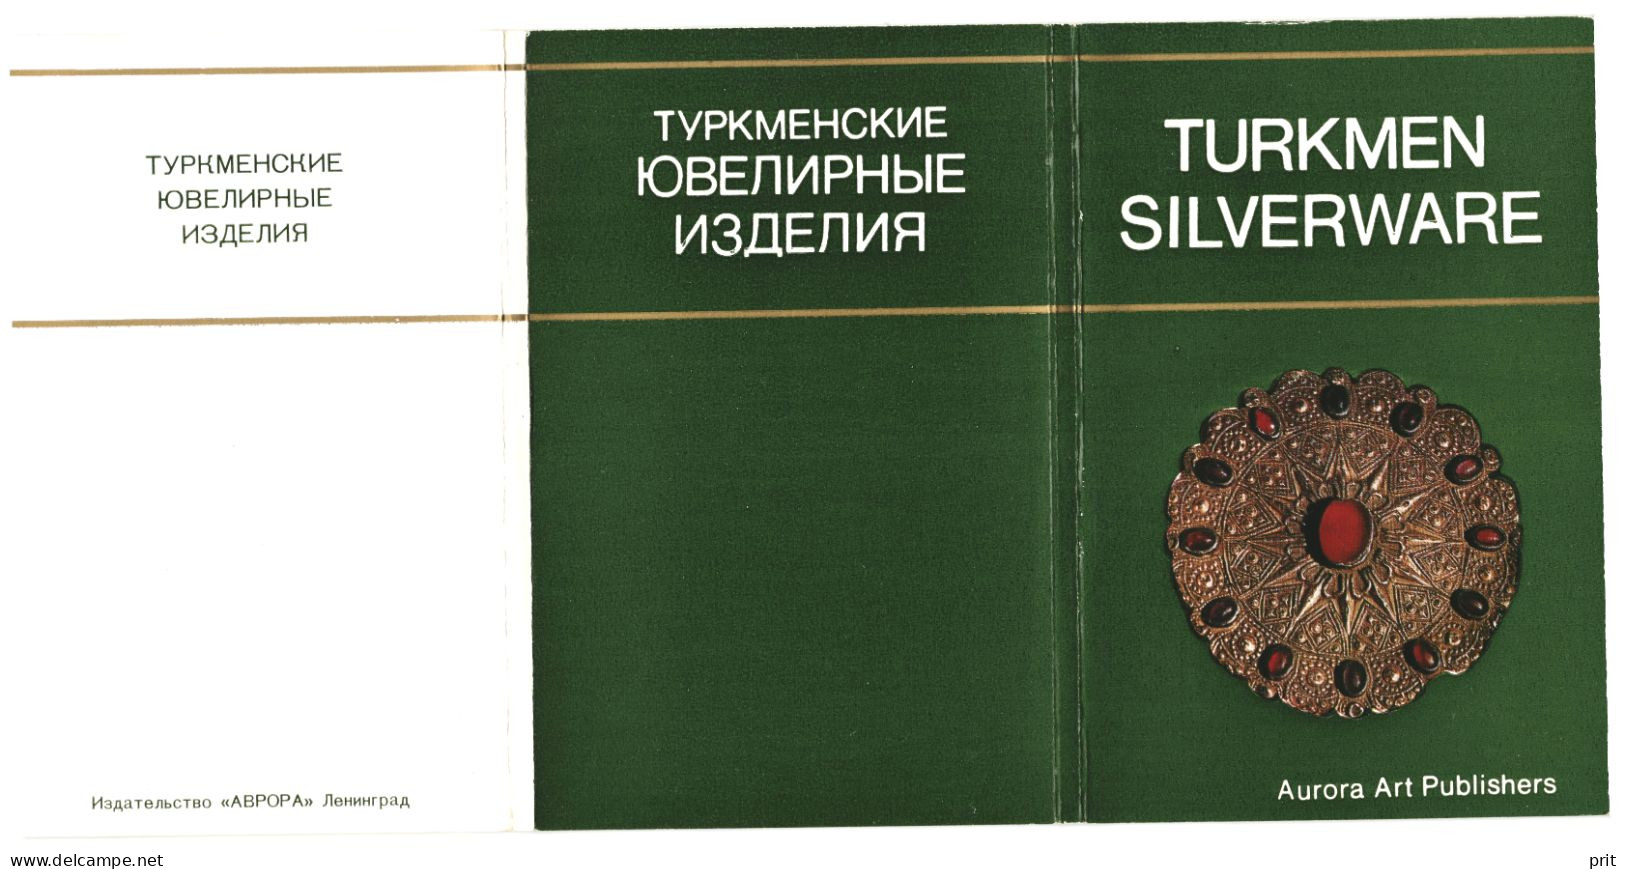 Turkmen Silverware Antique Jewelry Unused 16 Postcards Set, Soviet Turkmenistan USSR 1975 Publisher Aurora, Leningrad - Turkmenistan